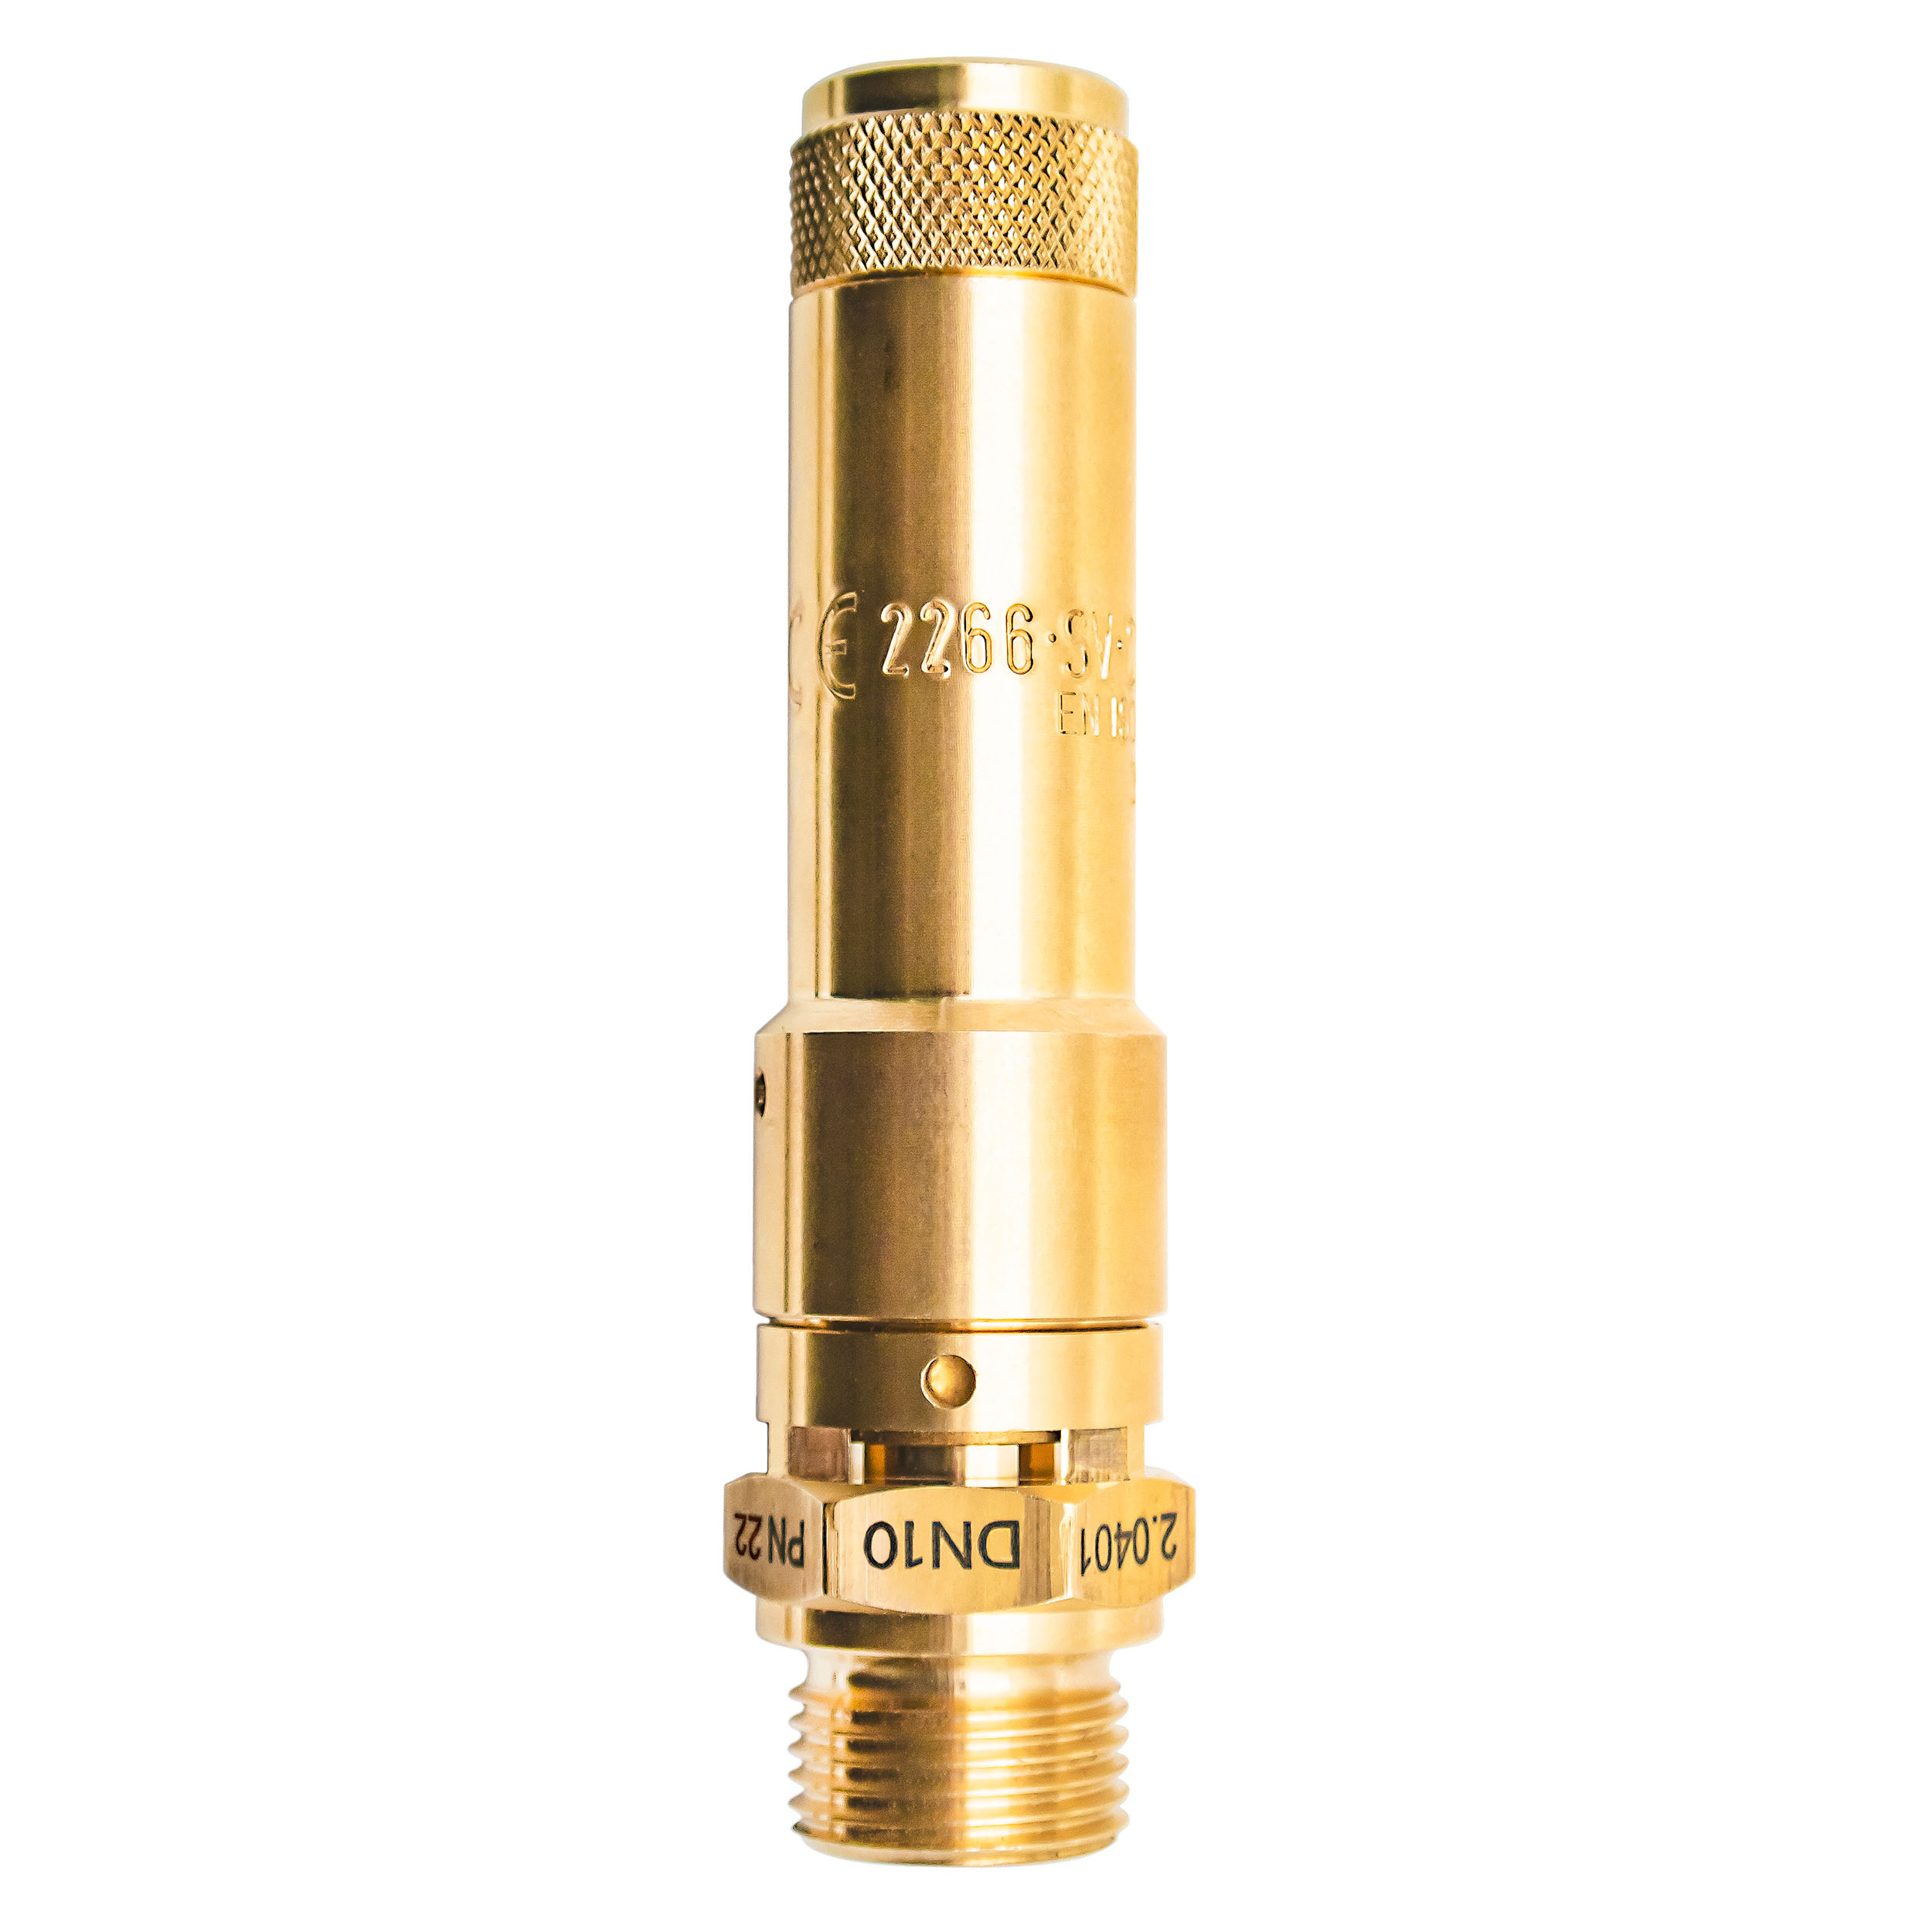 Savety valve component tested DN 10, G¾, set pressure: 5.0 bar (72,5 psi)